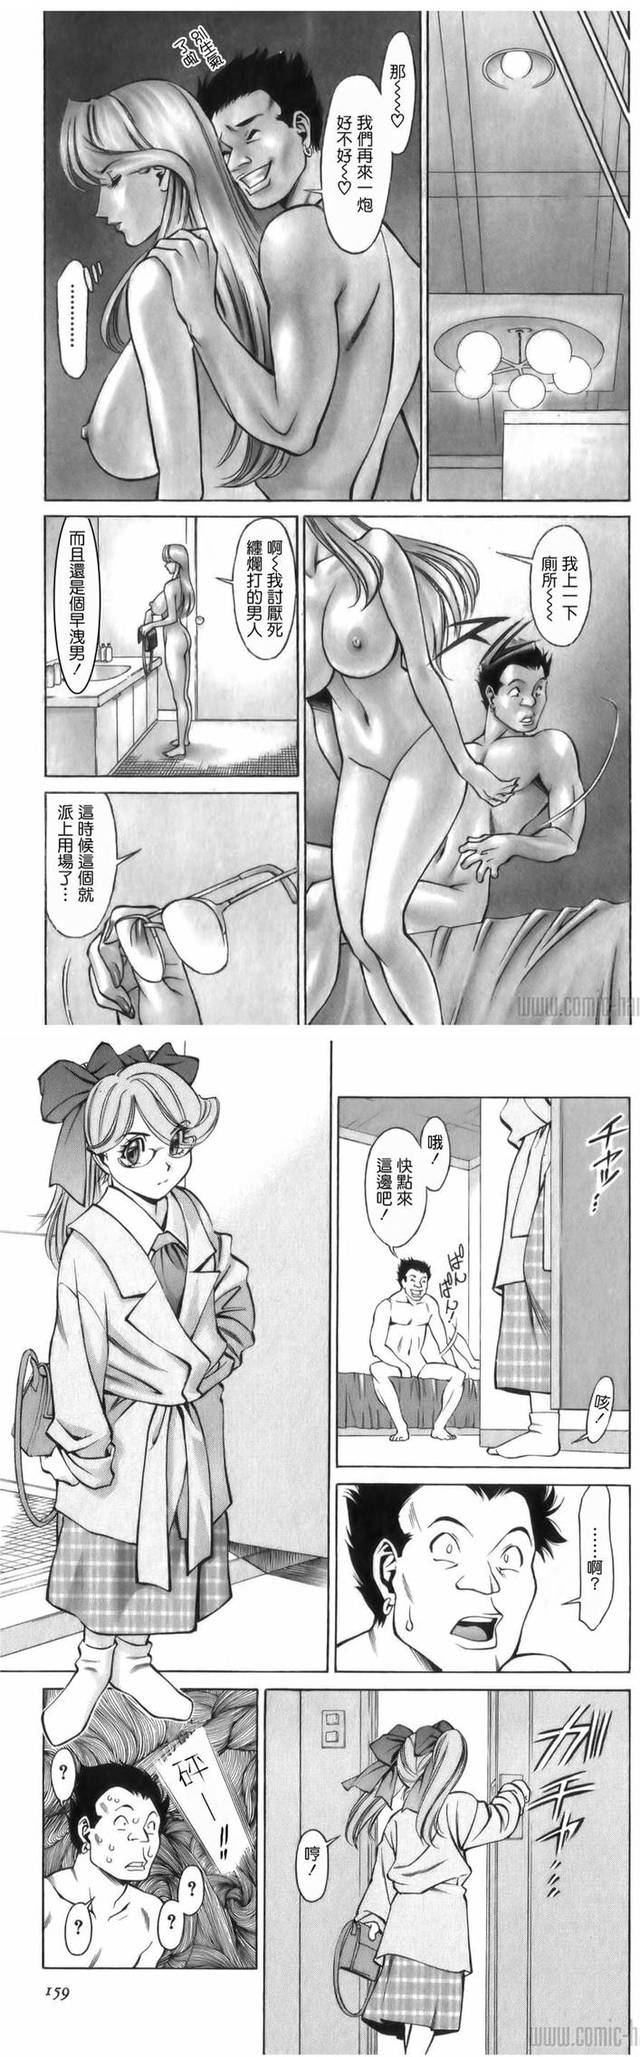 g hentai breast expansion manga karte anim hitomi